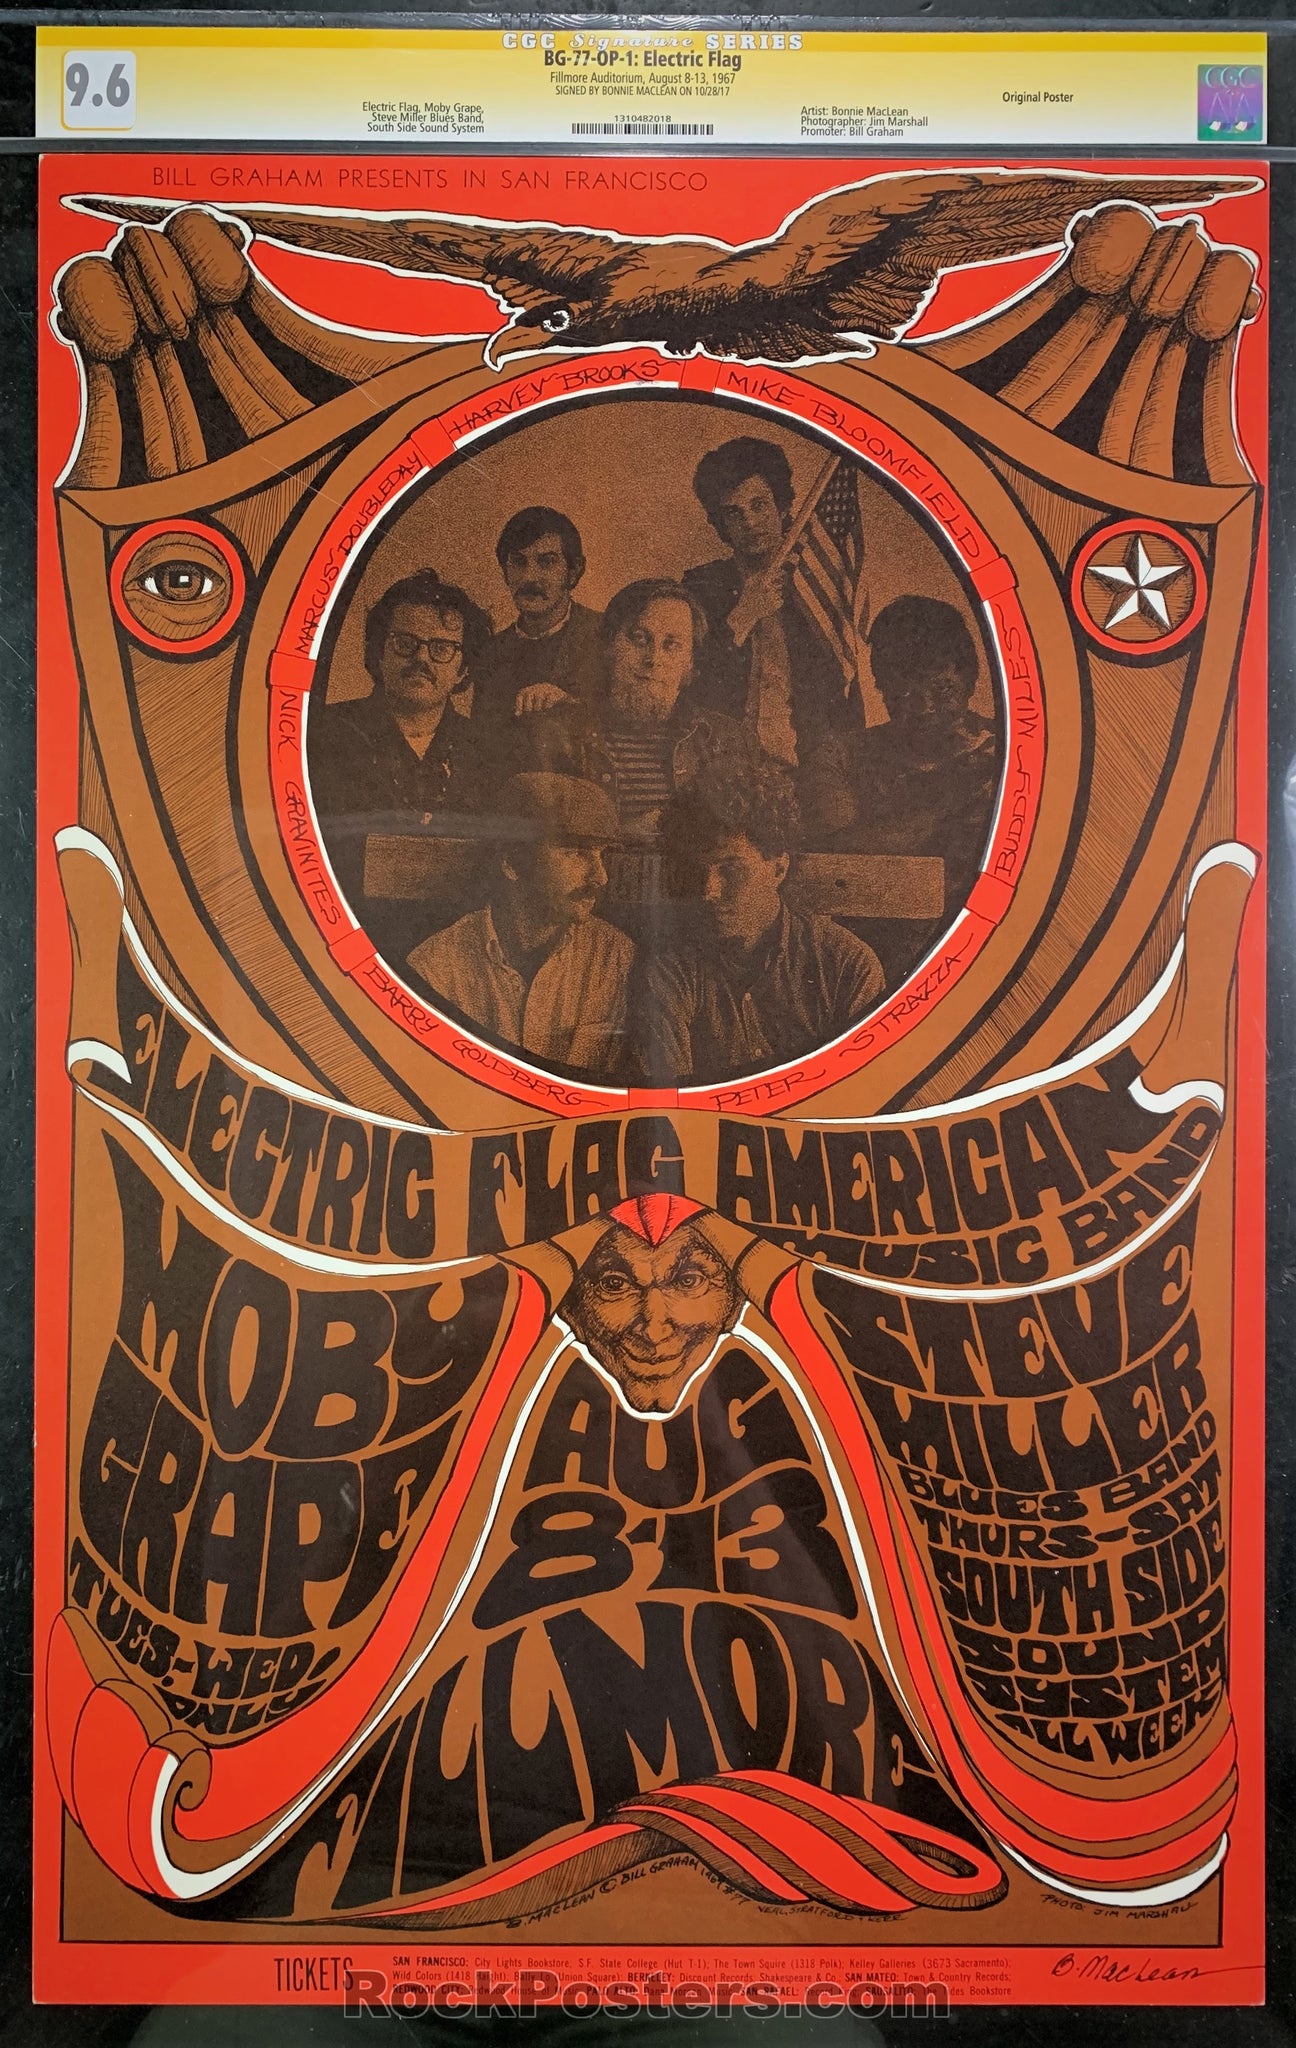 AUCTION - BG-77 - Electric Flag - 1967 Poster - Bonnie MacLean Signed - Fillmore Auditorium - CGC Graded 9.6